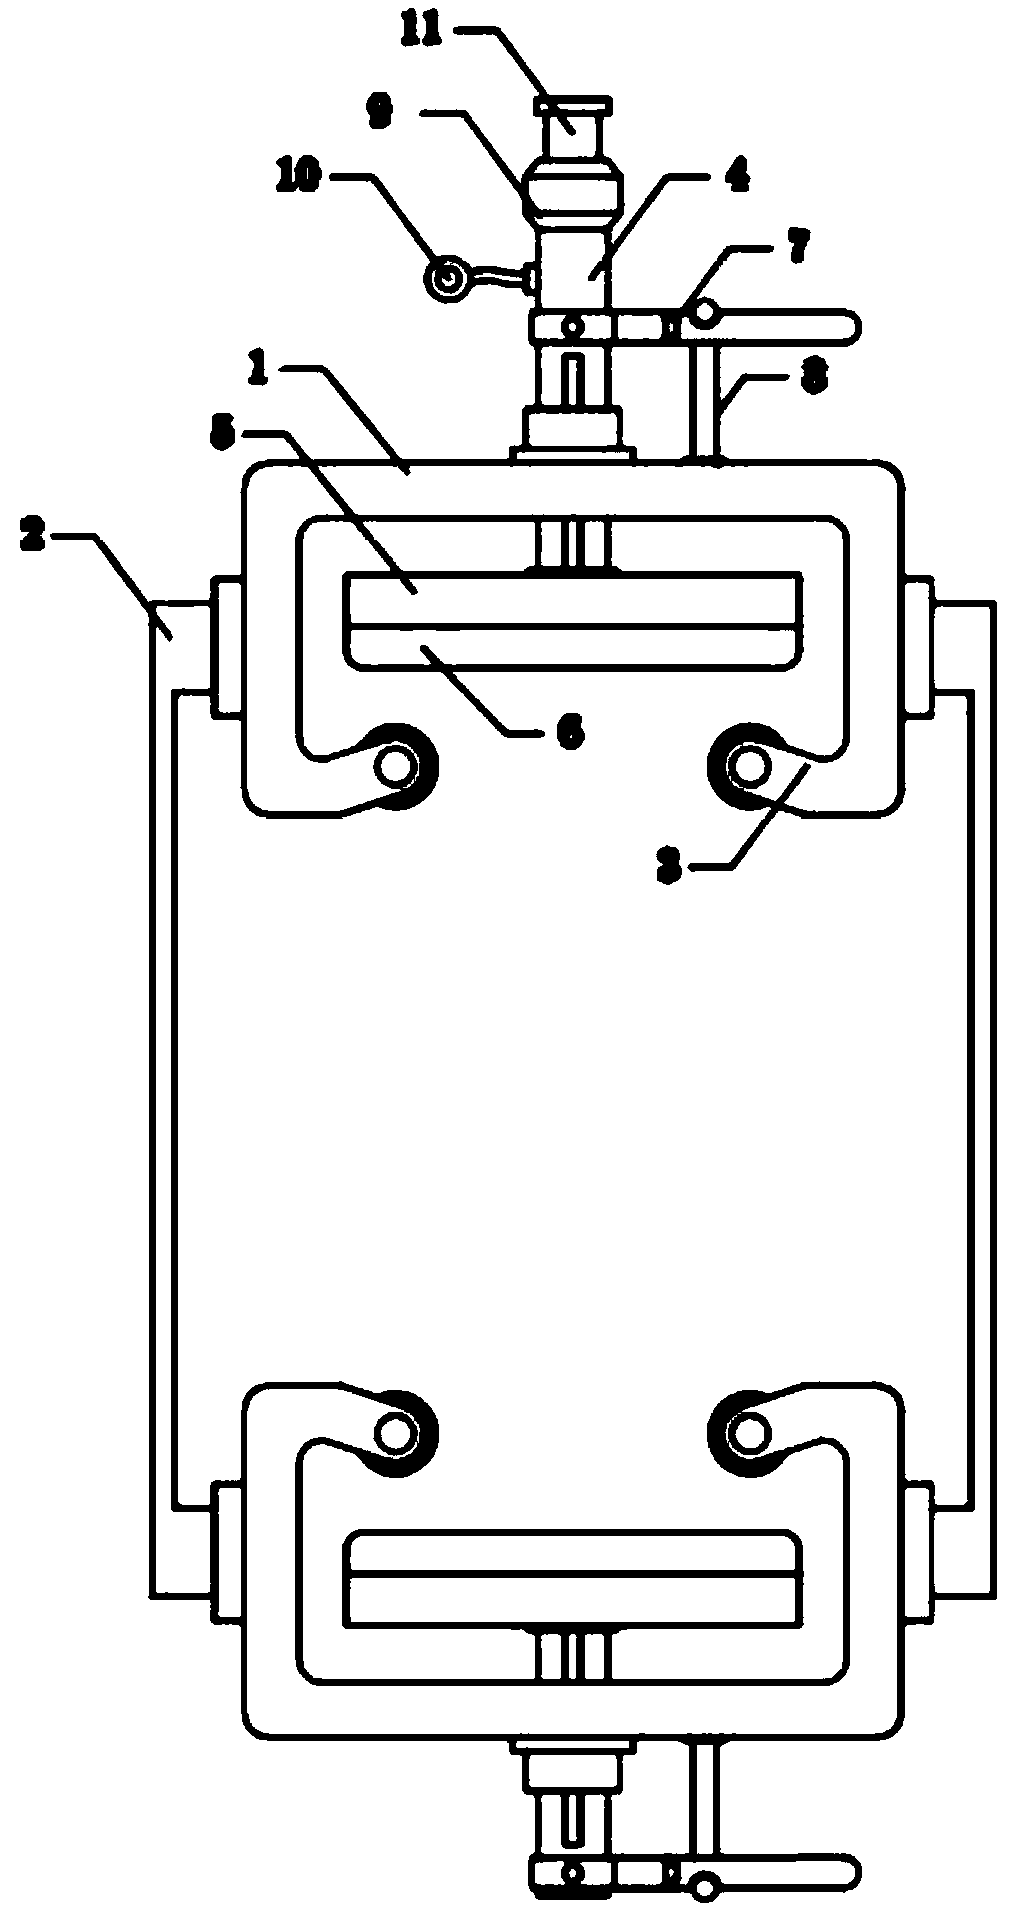 Portable valve leakage detection device